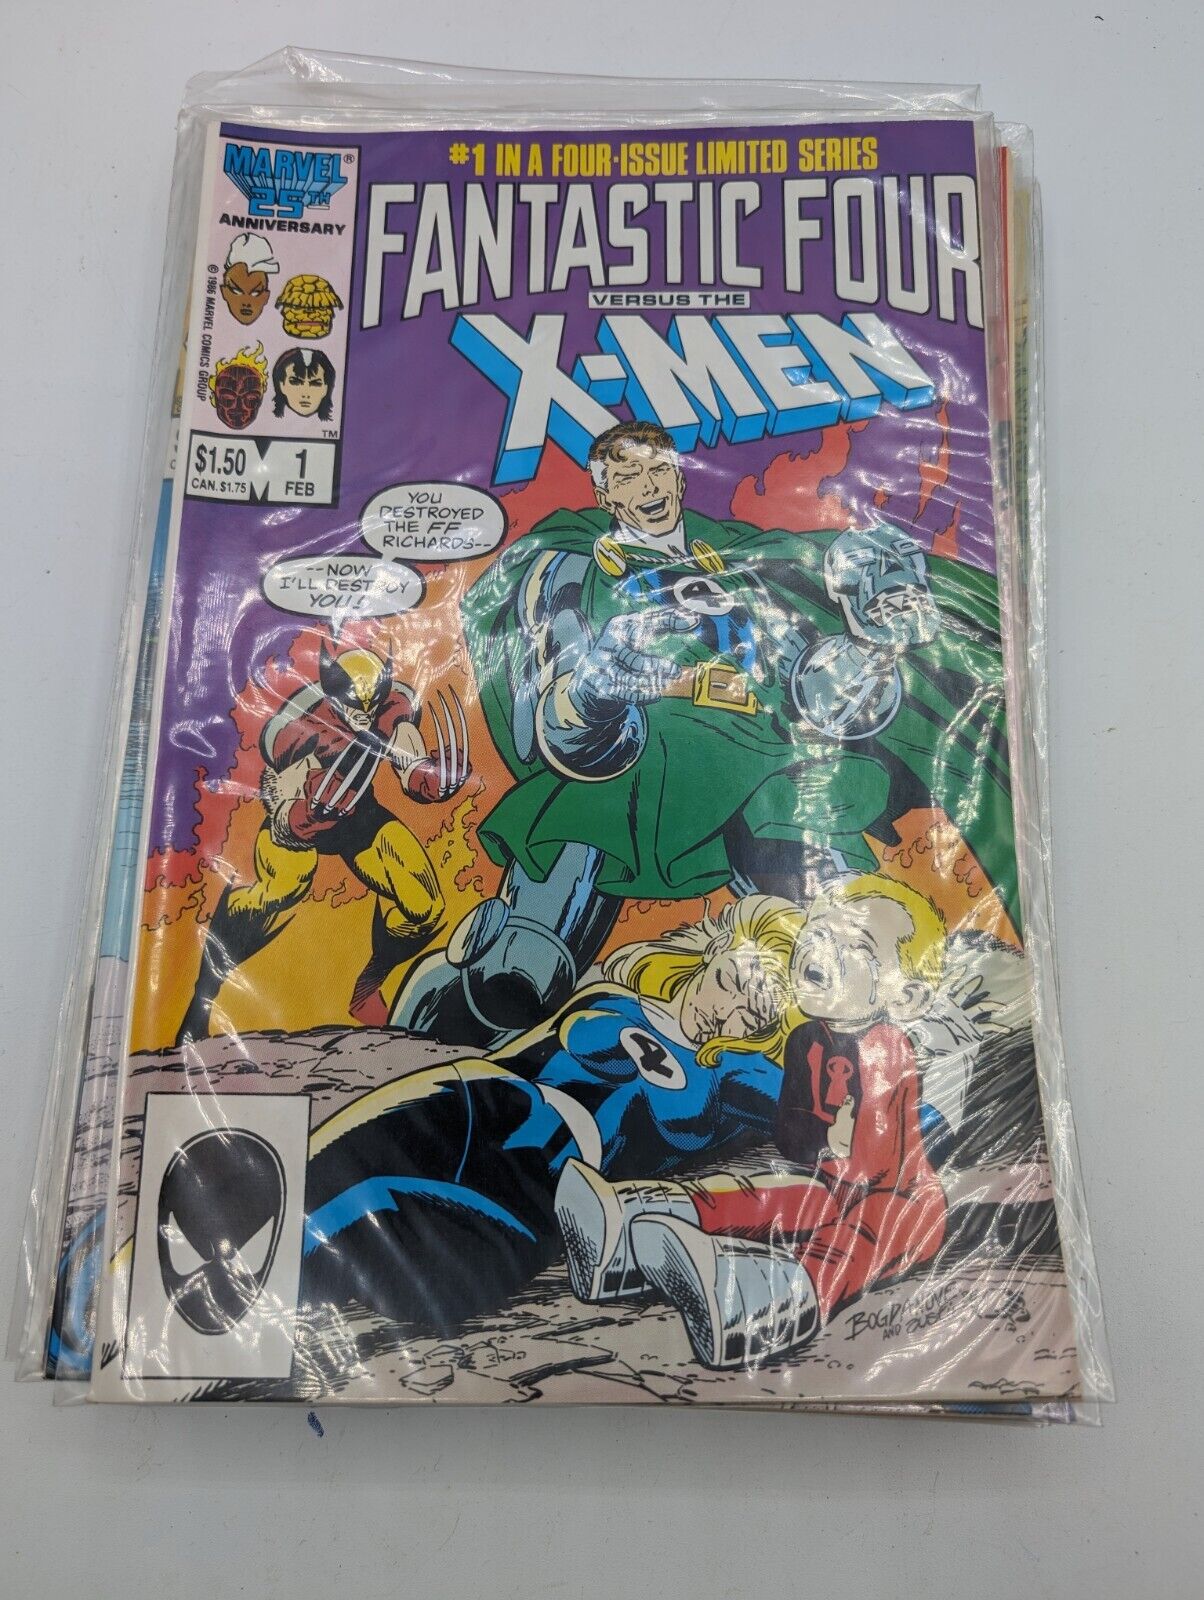 MARVEL COMICS FANTASTIC FOUR versus the X-MEN  #1